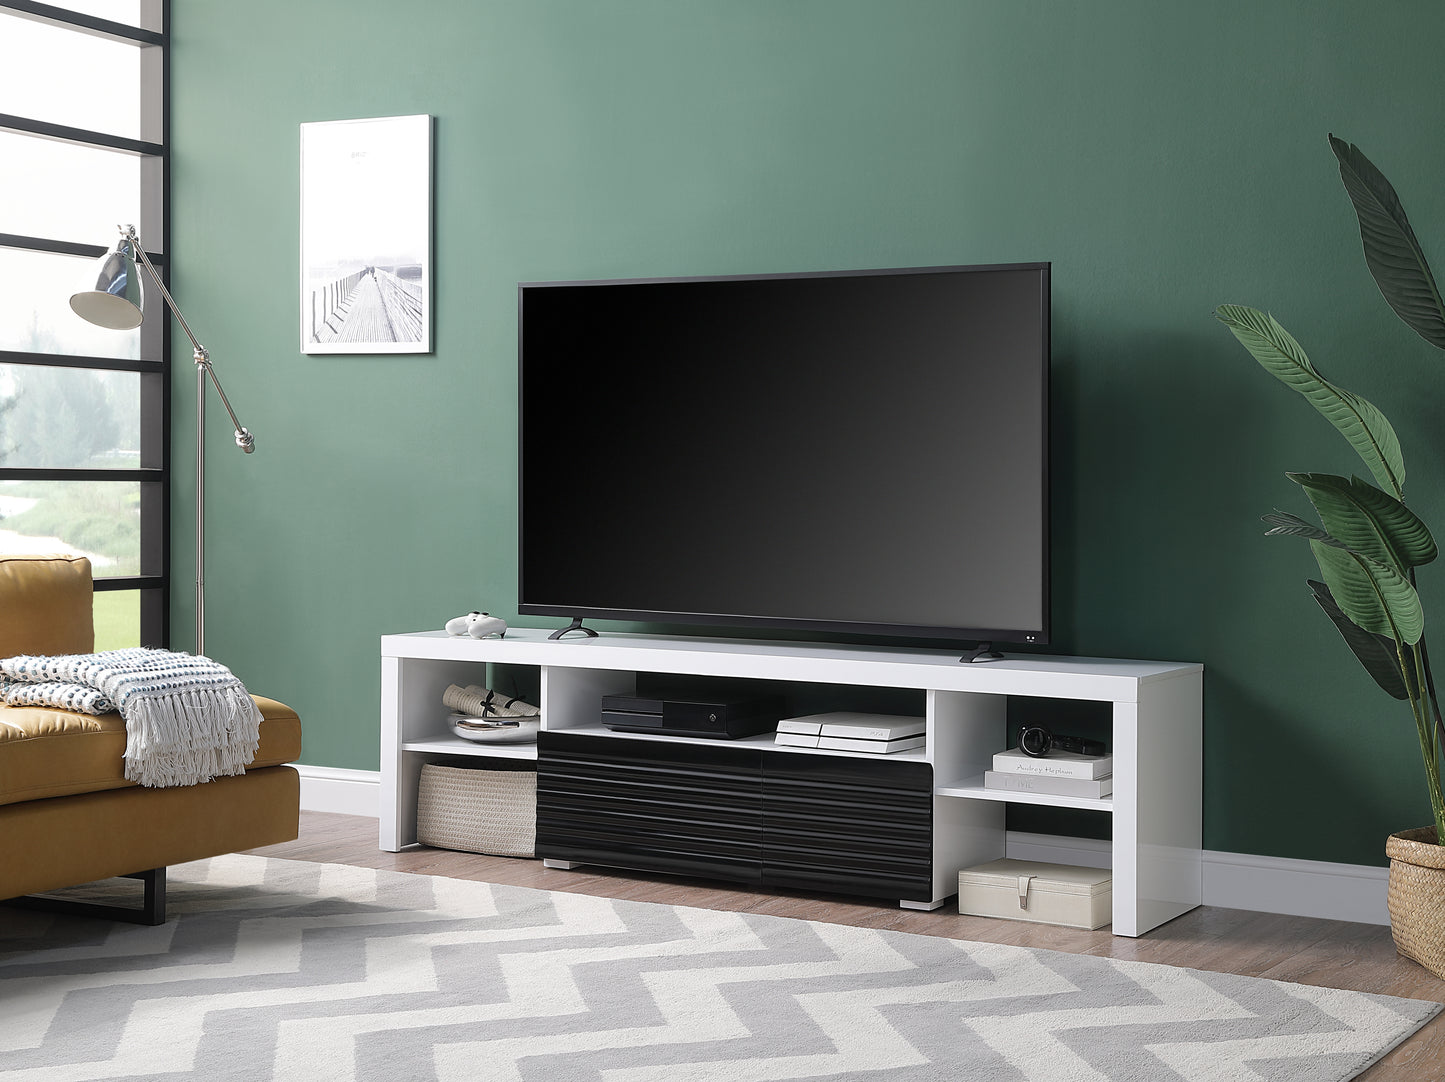 ACME Buck II TV Stand in White & Black High Gloss Finish LV00998 - Enova Luxe Home Store